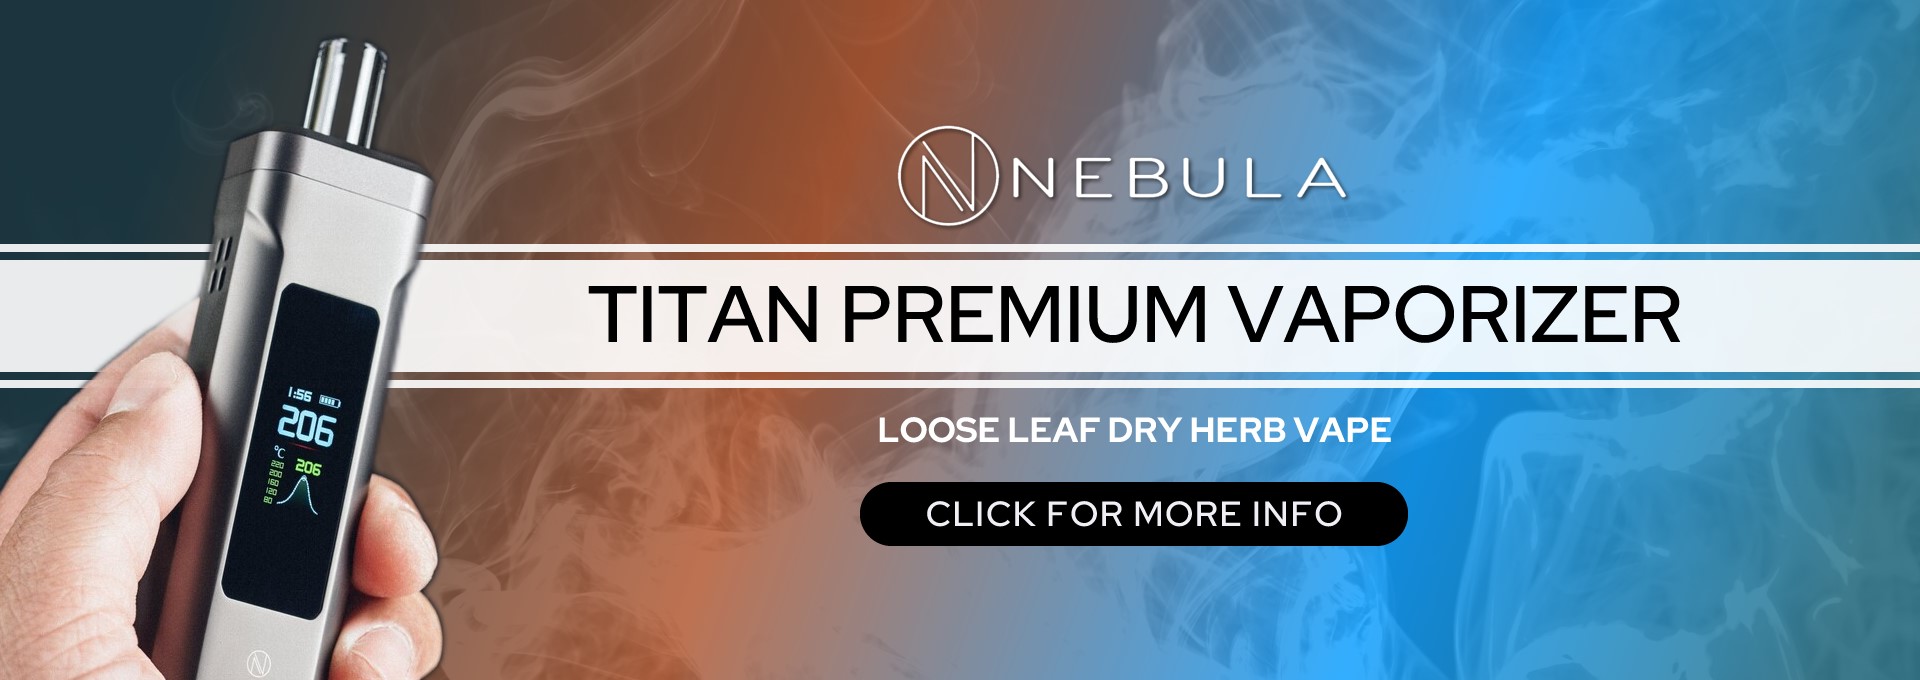 Nebula titan vape herb